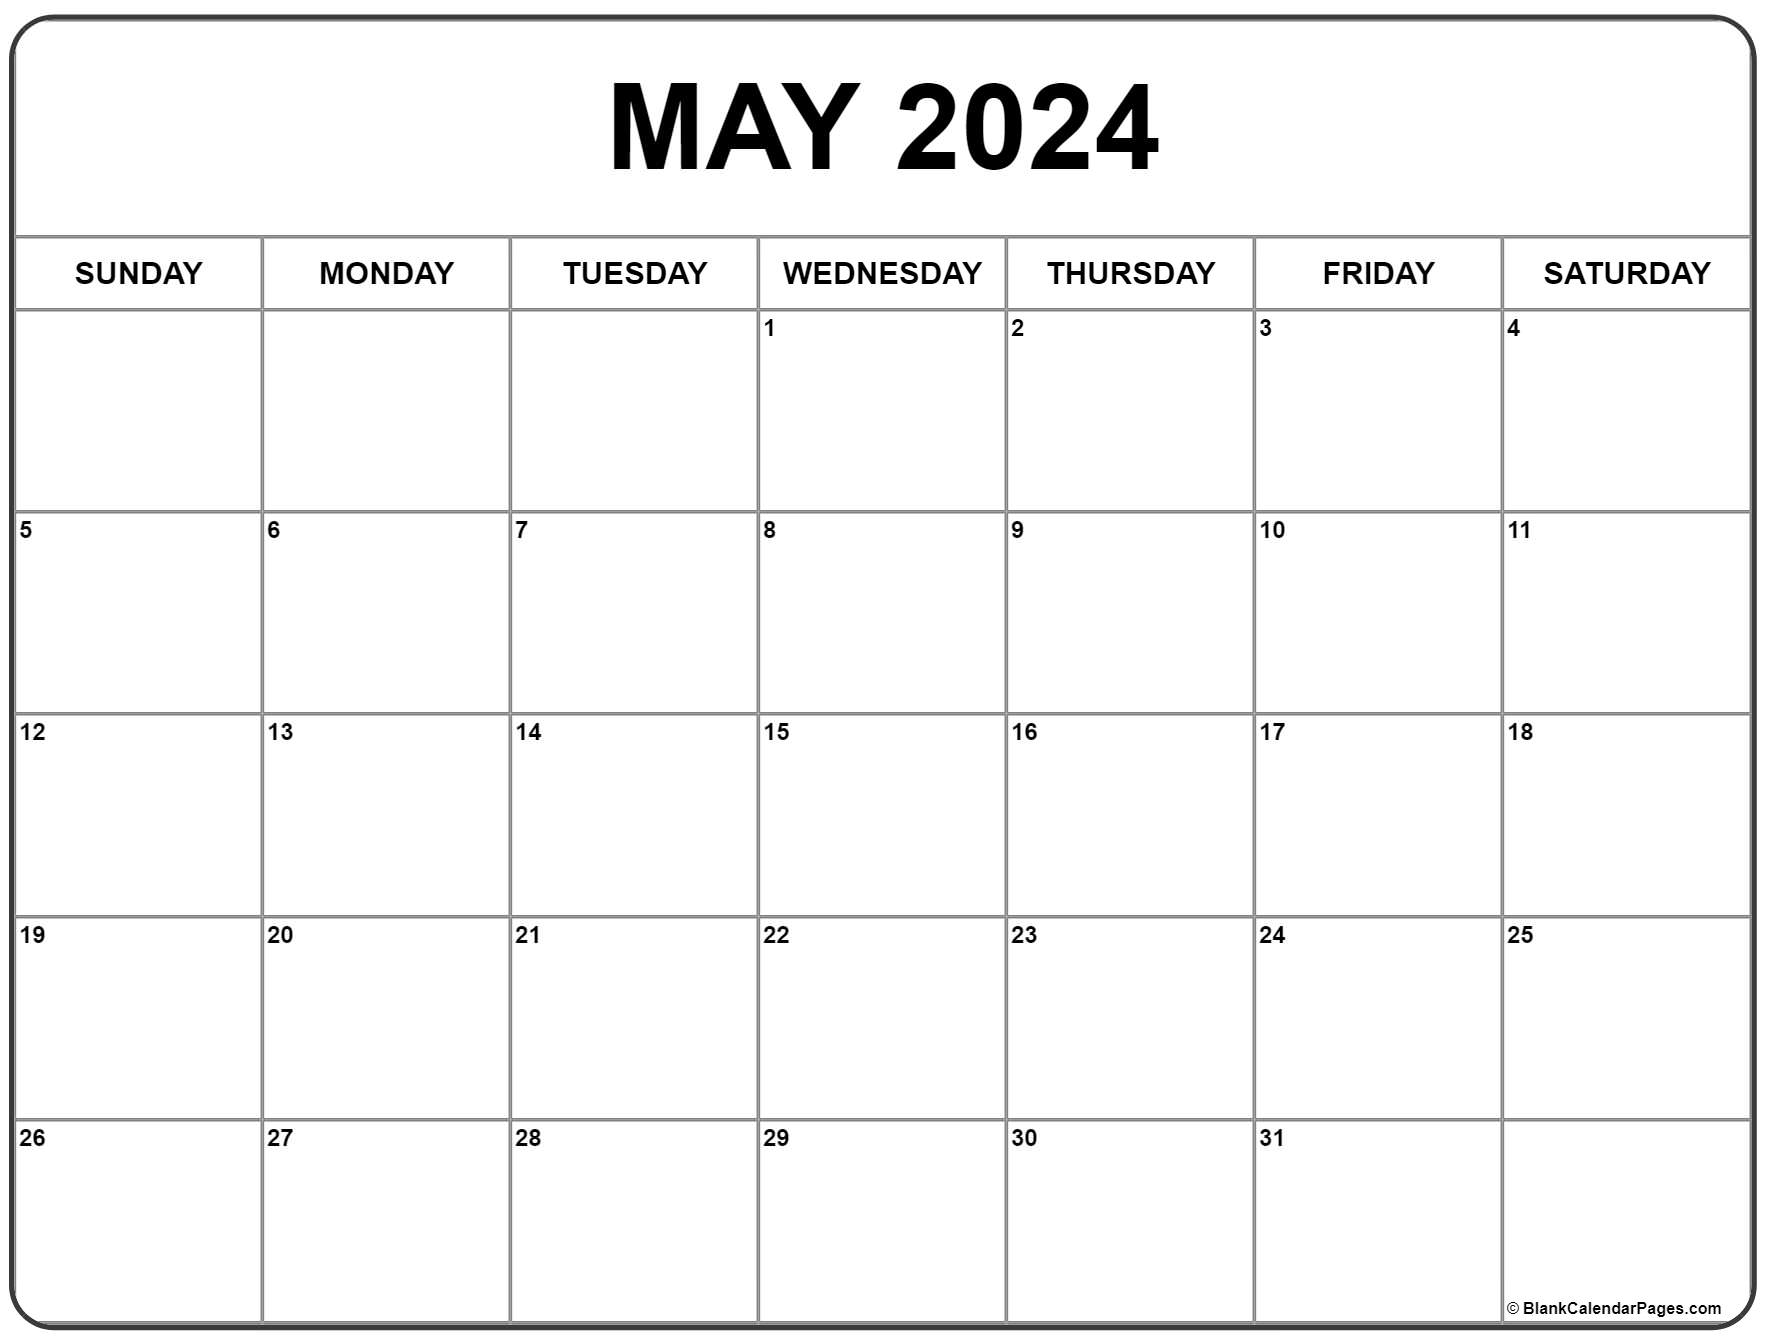 May 2024 Calendar | Free Printable Calendar for Free Calendar May 2024 Printable